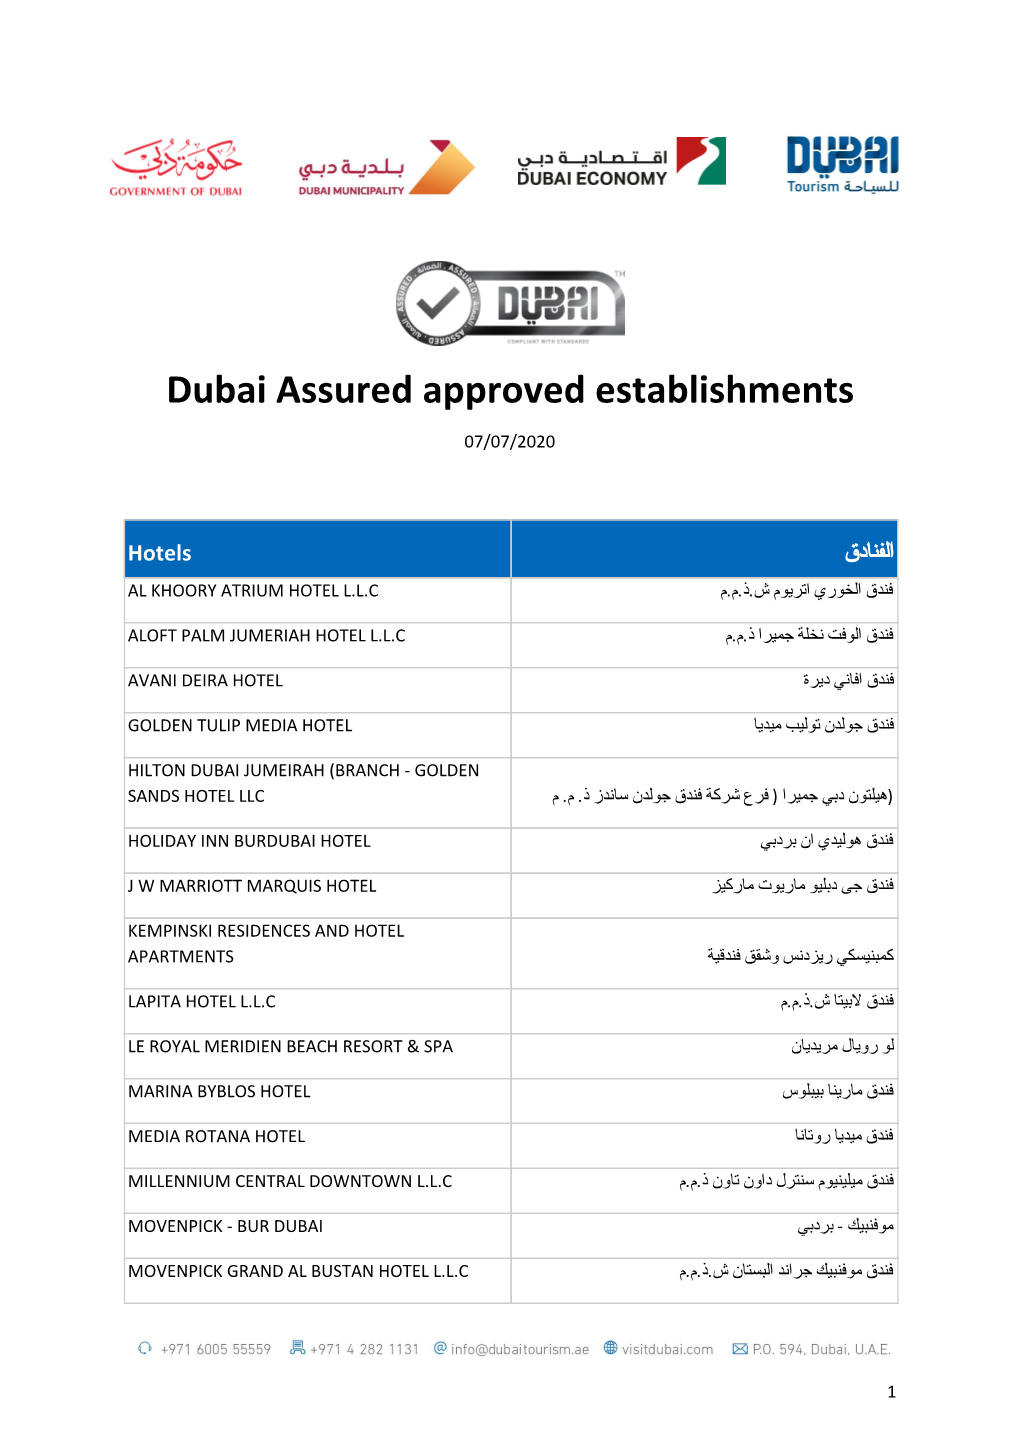 Dubai Assured Approved Establishments